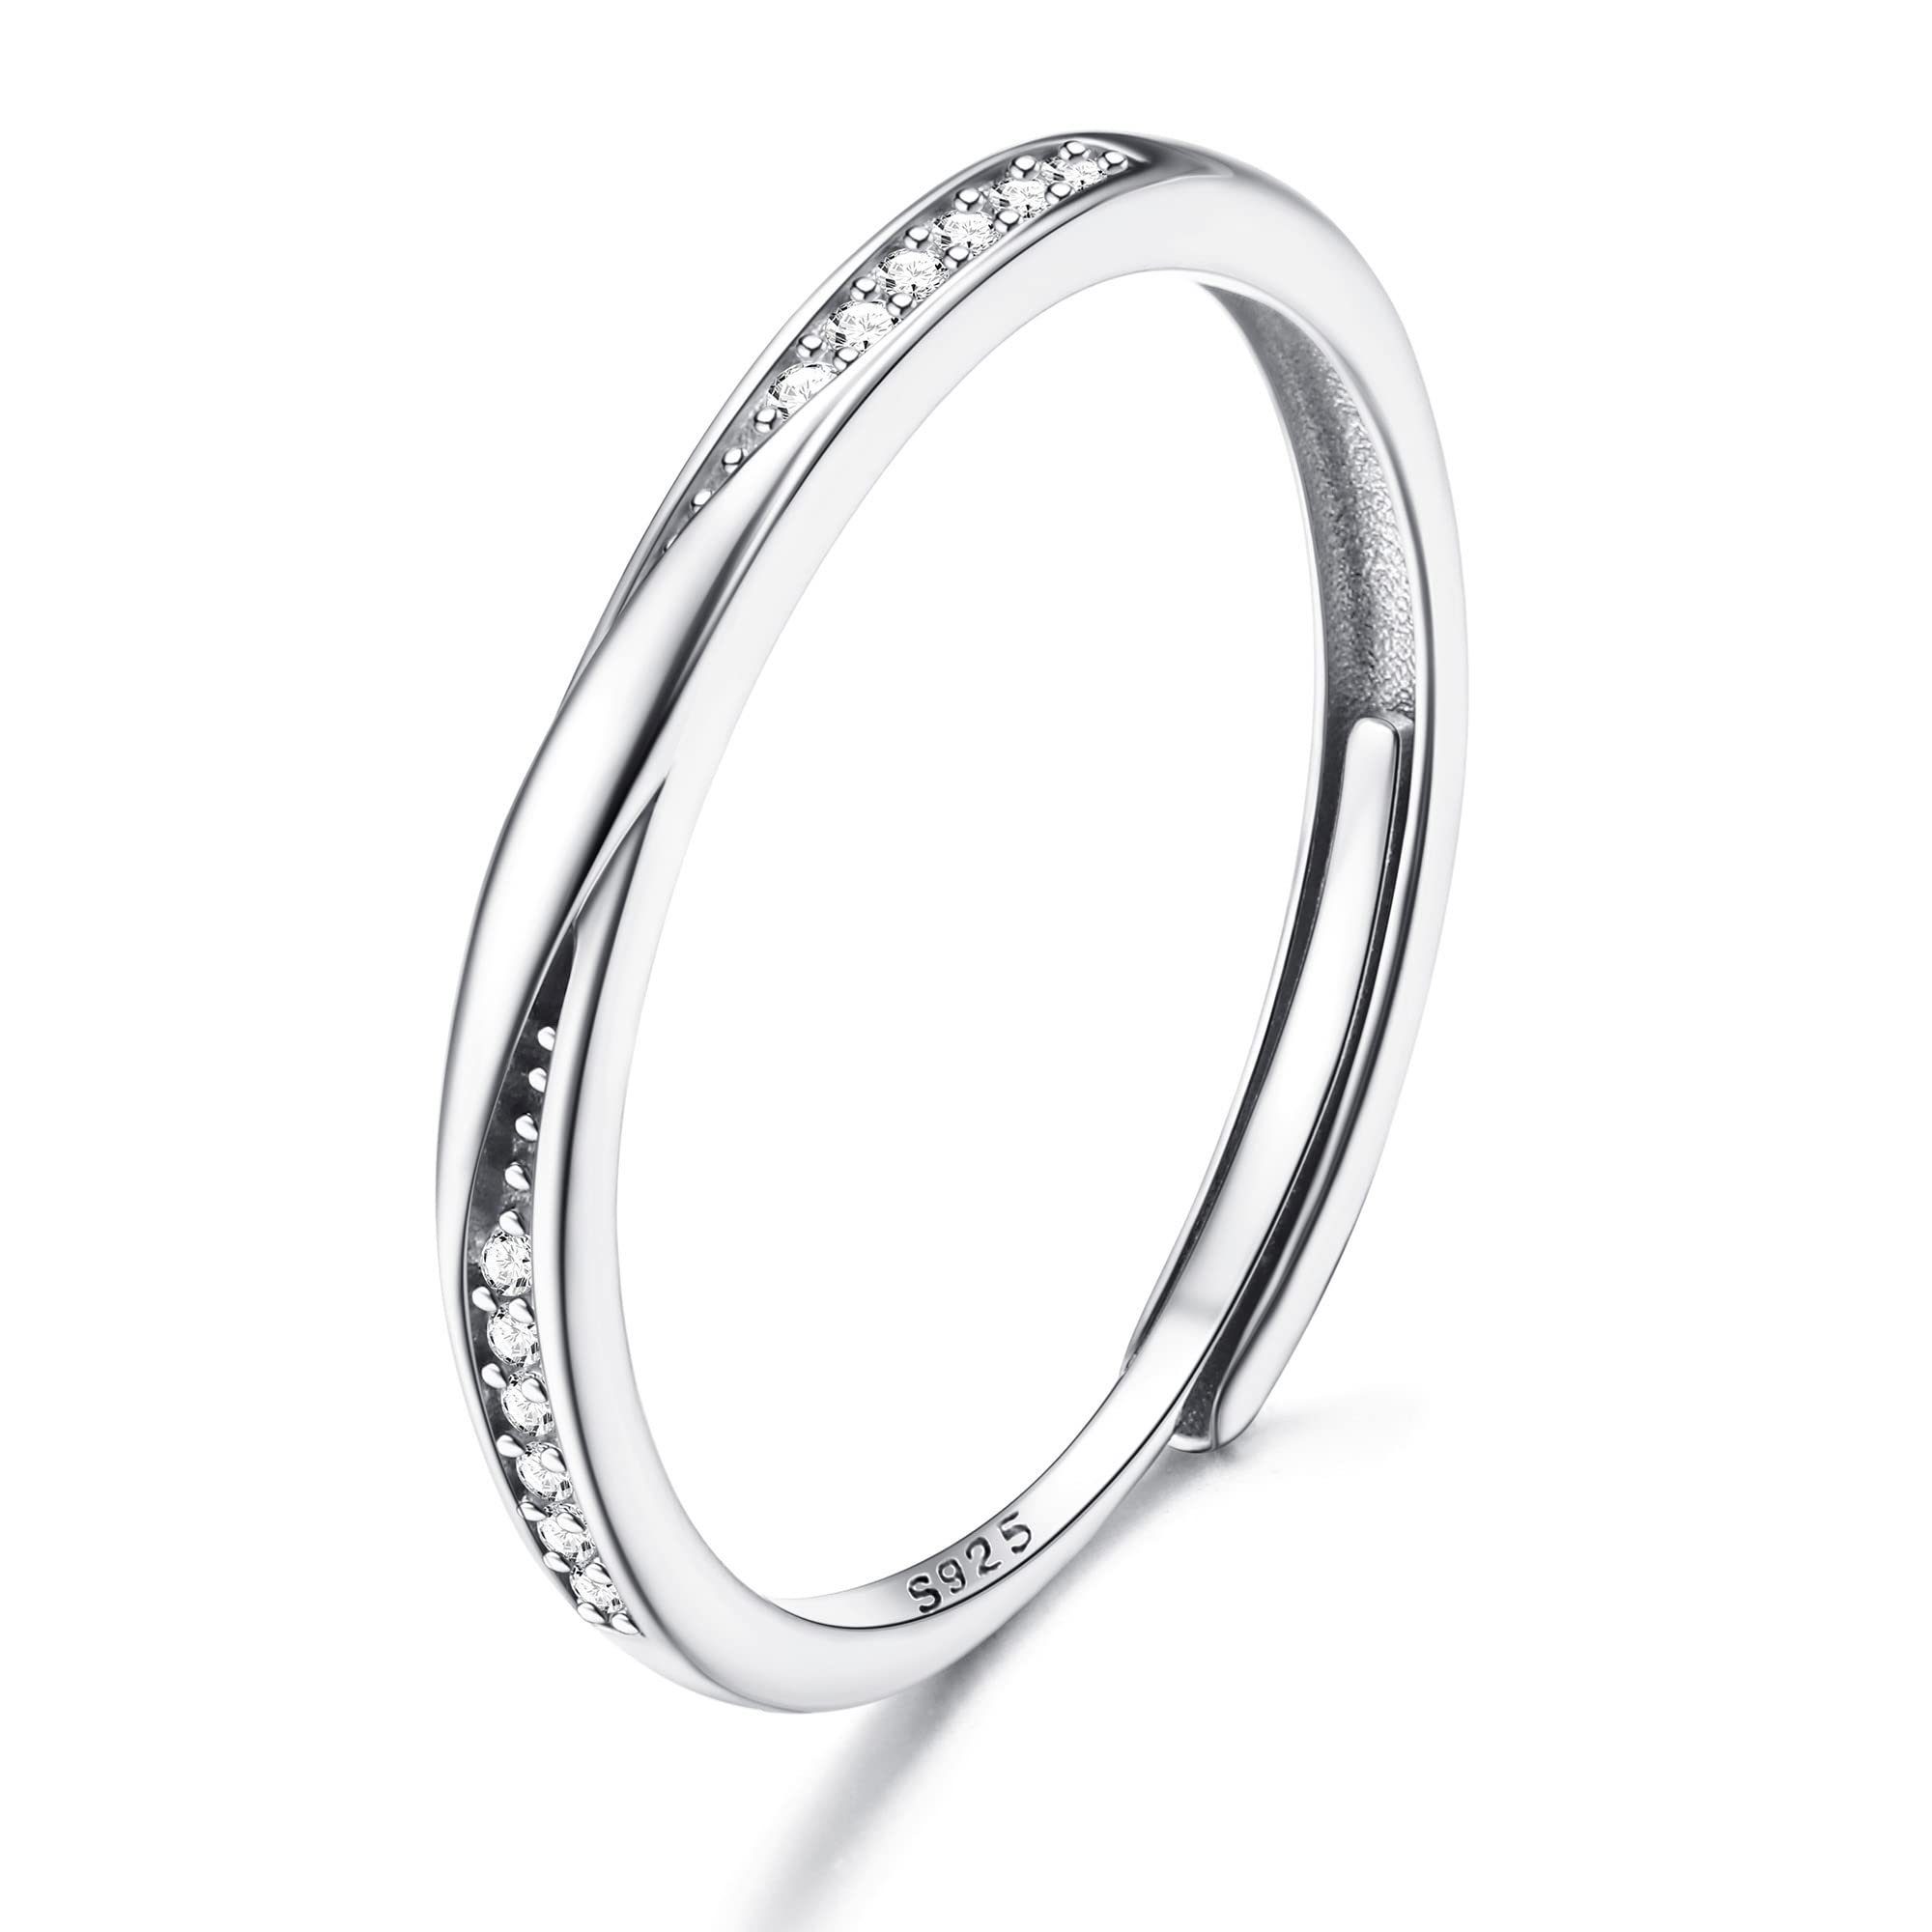 POCHUMIDUU Fingerring 925 Silber Verstellbarer Mode Trend 925er für Frauen Silberschmuck Damen Sterlingsilber aus Ring